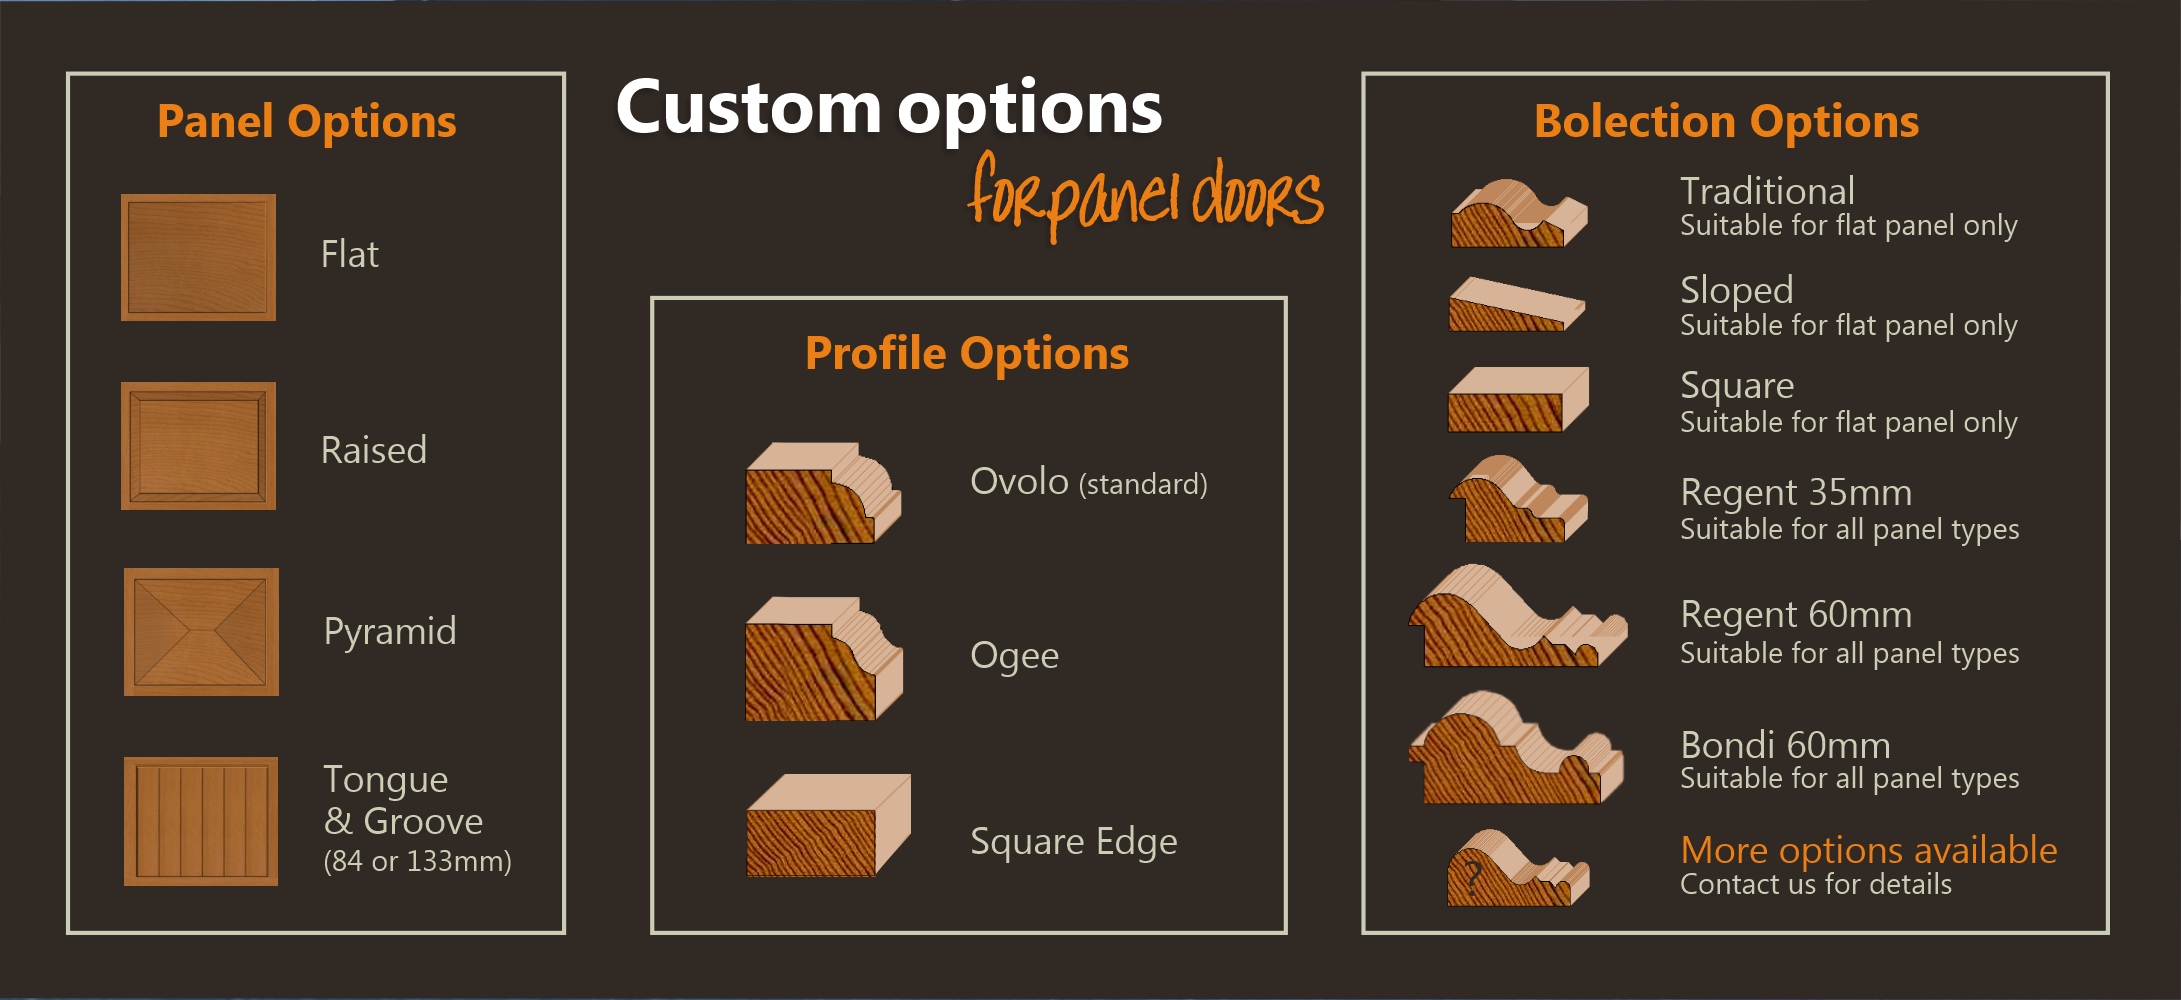 Custom options for panel doors